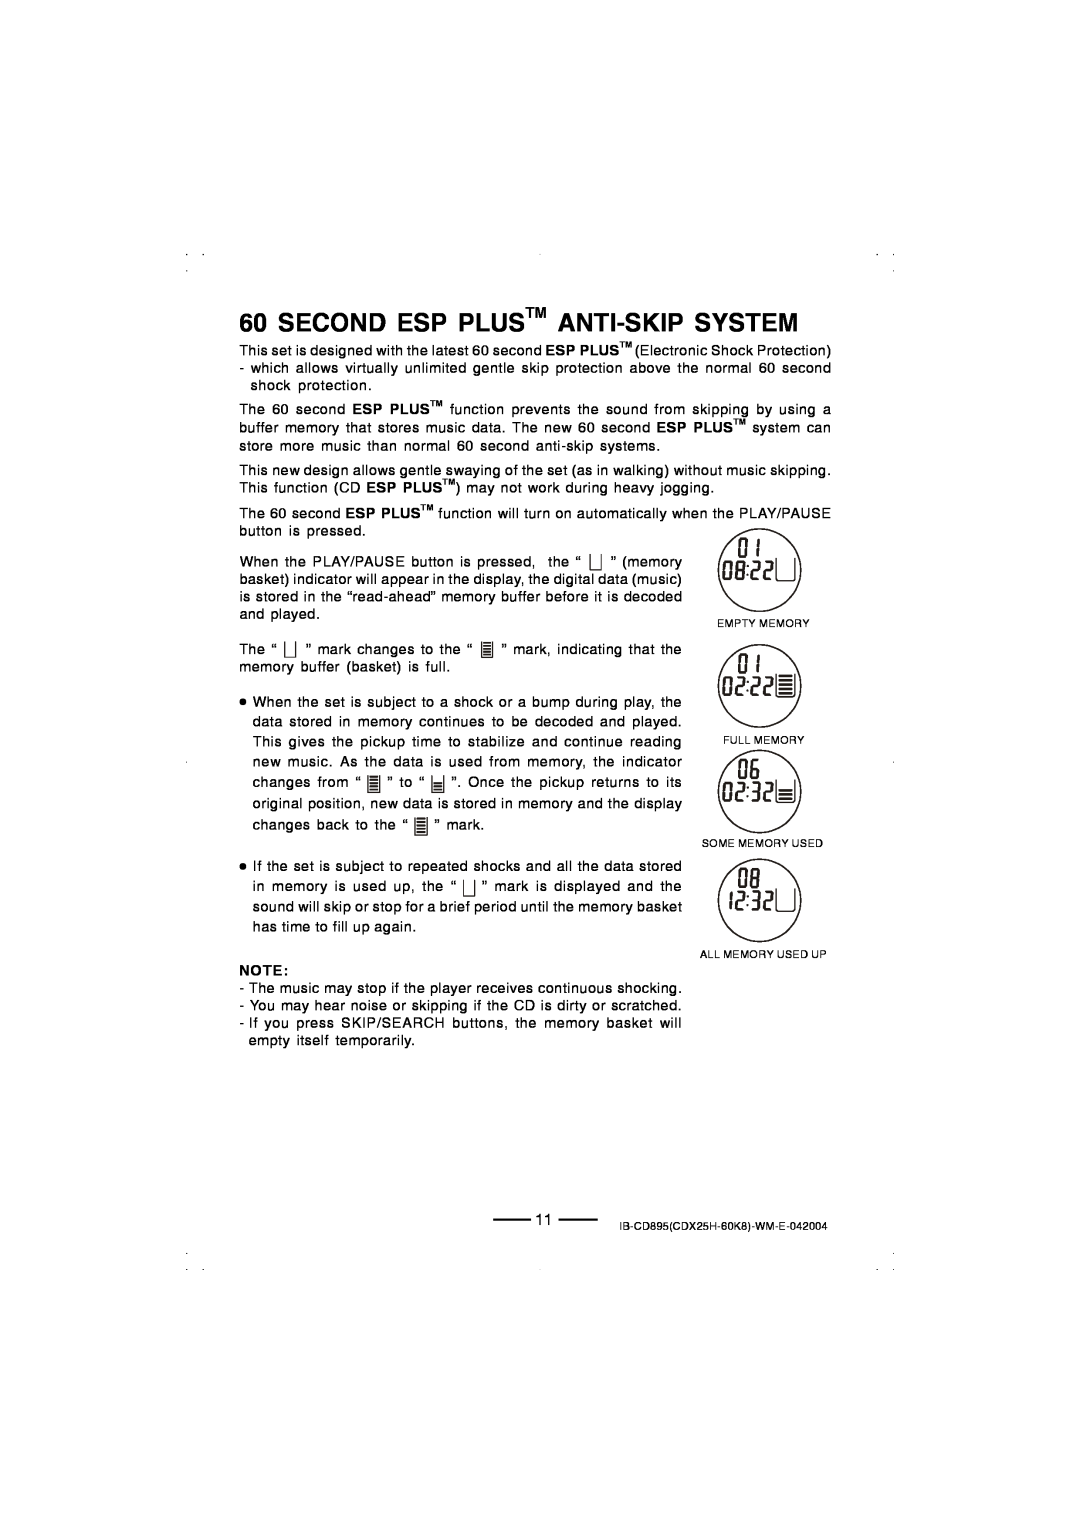 Lenoxx Electronics CD-895 manual Second Esp Plustm Anti-Skipsystem 